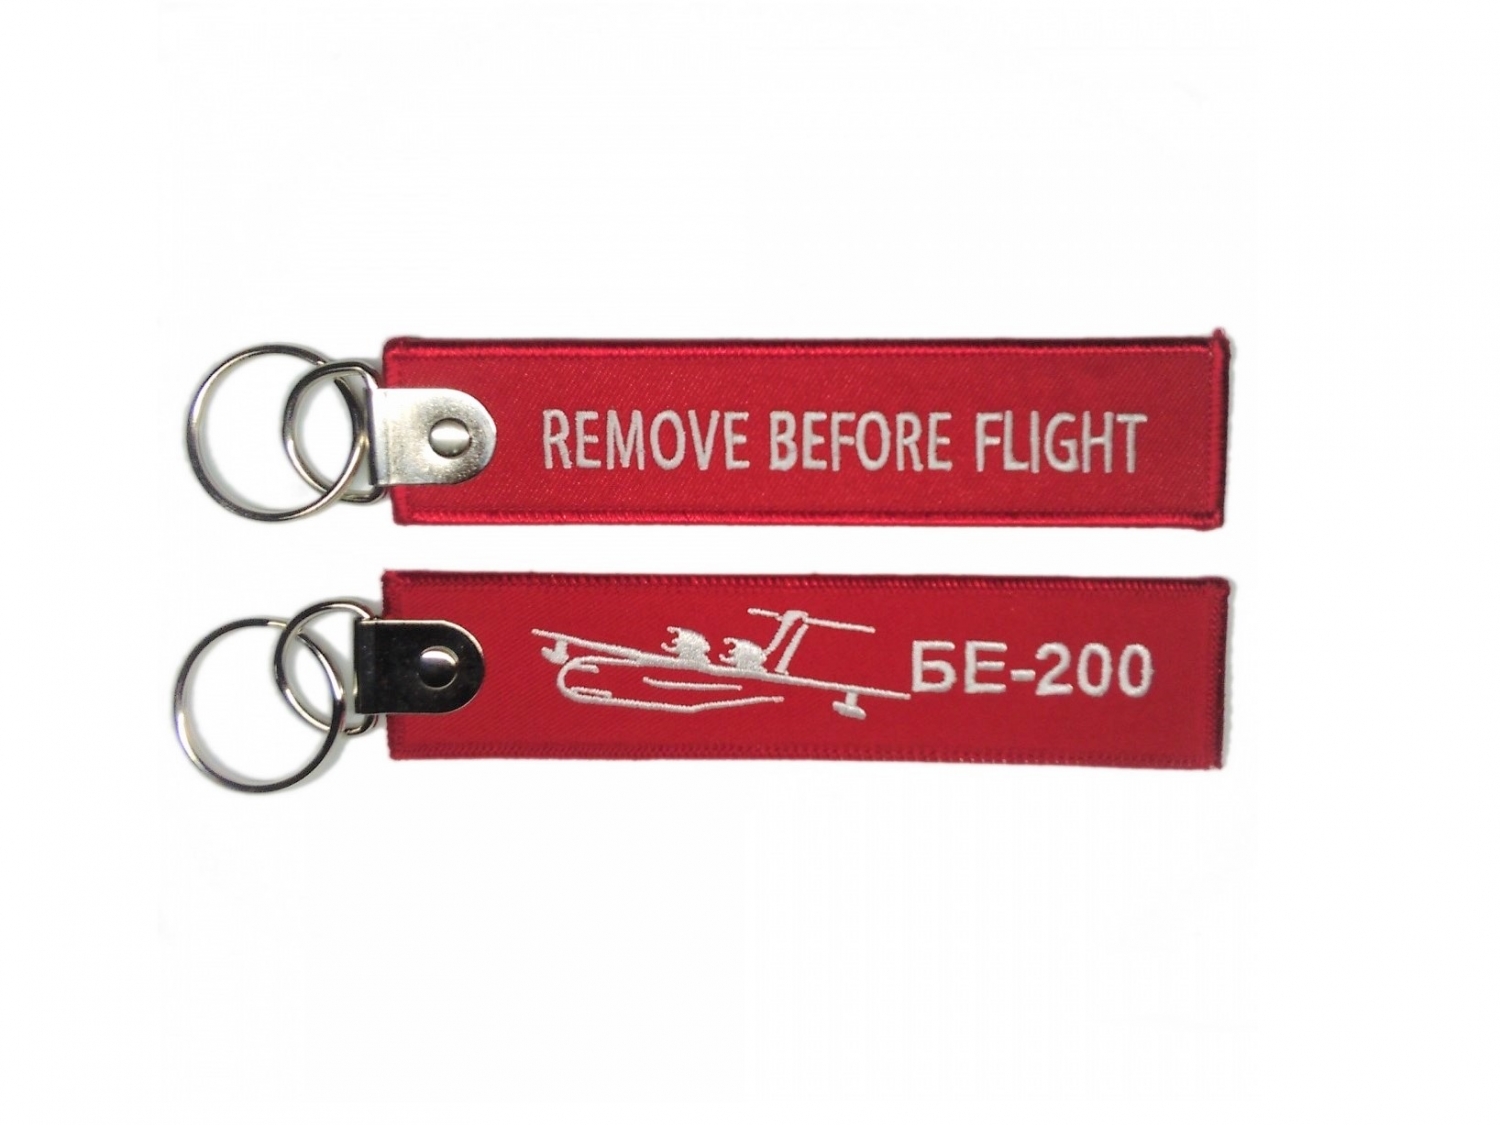   Брелок   Remove before flight -  БЕ-200 